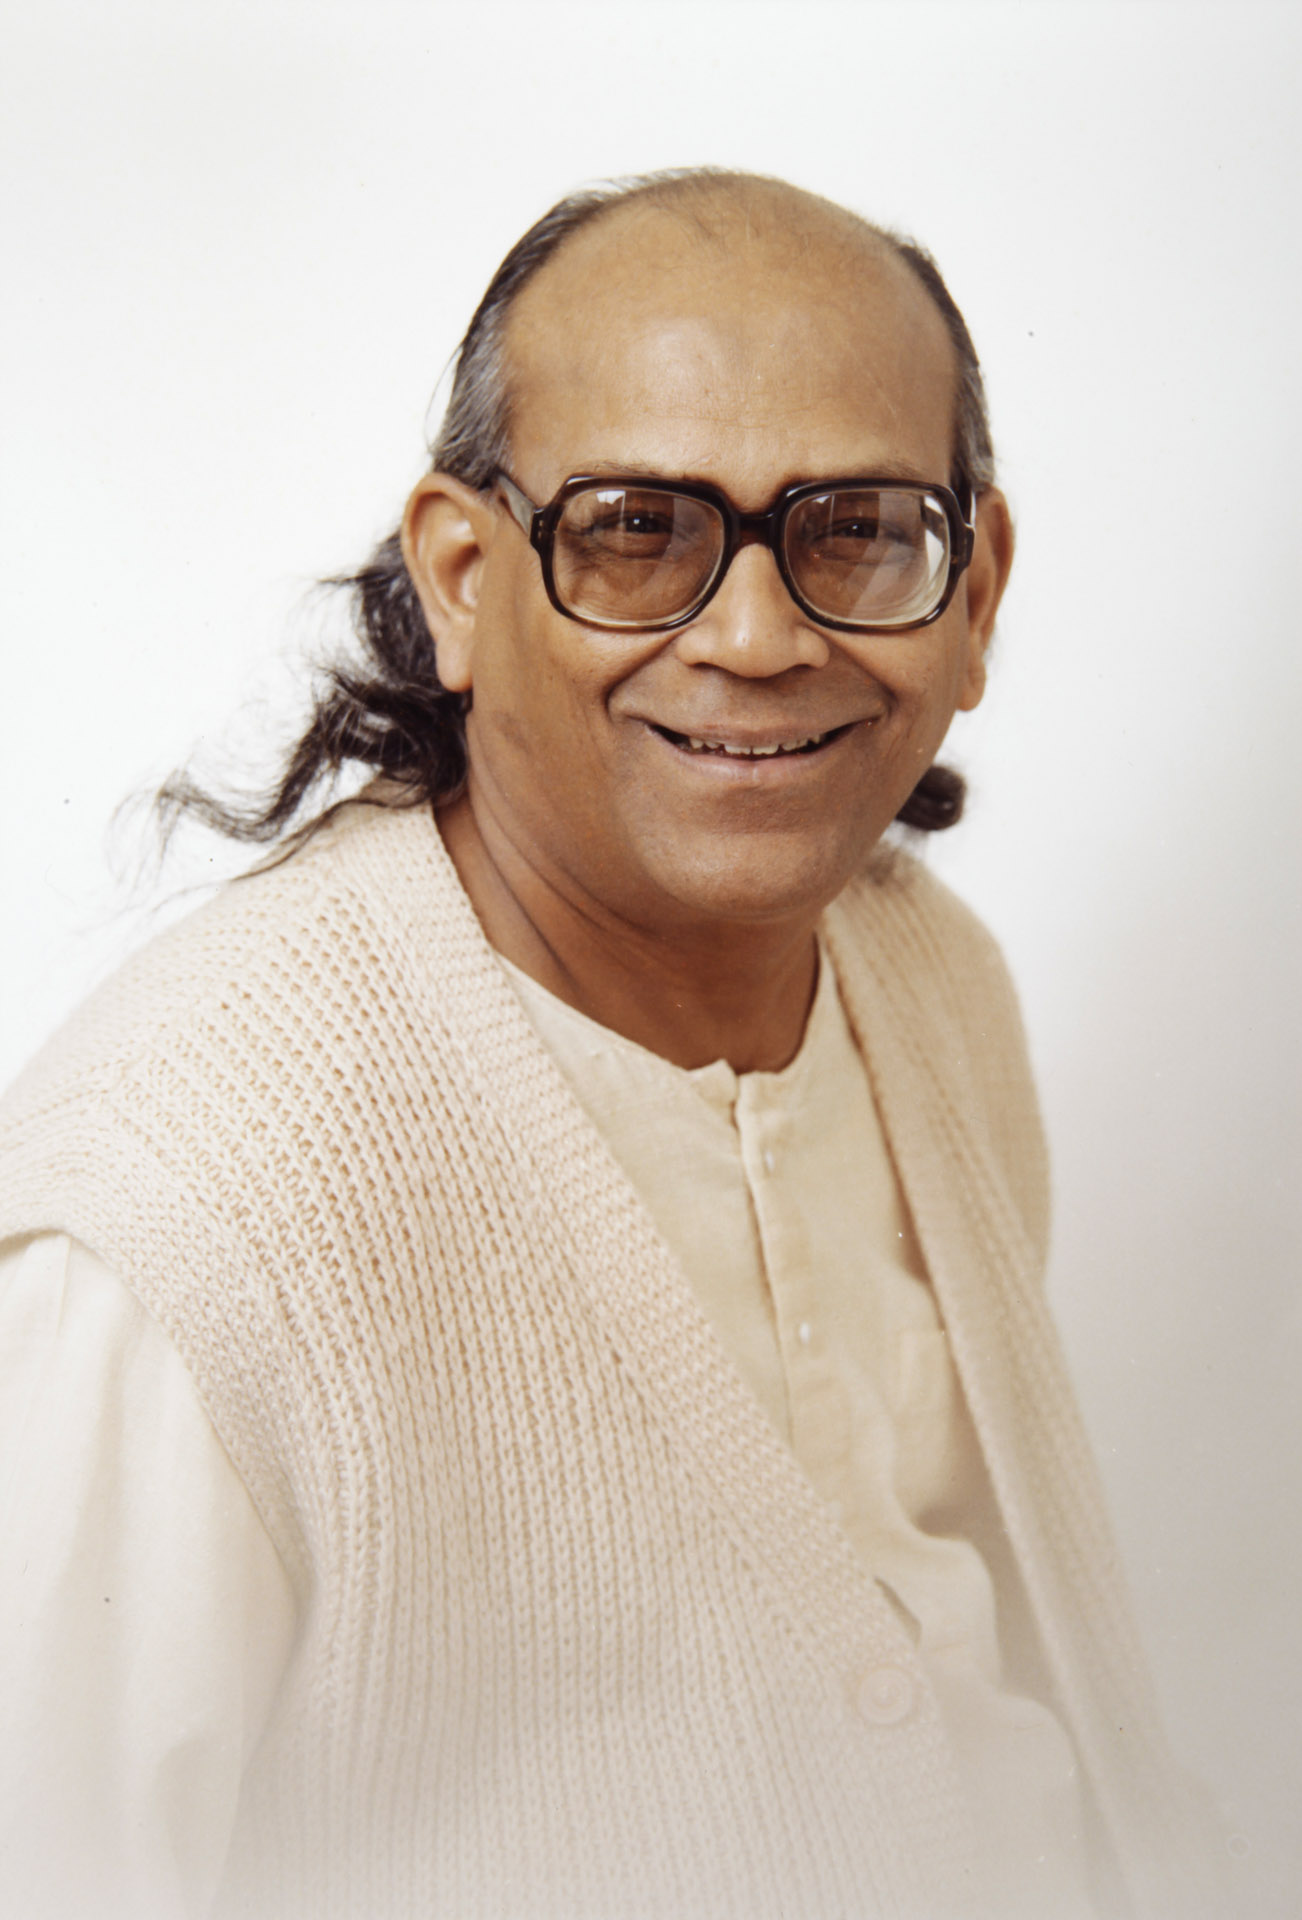 H.H. Swami Brahmananda Giri